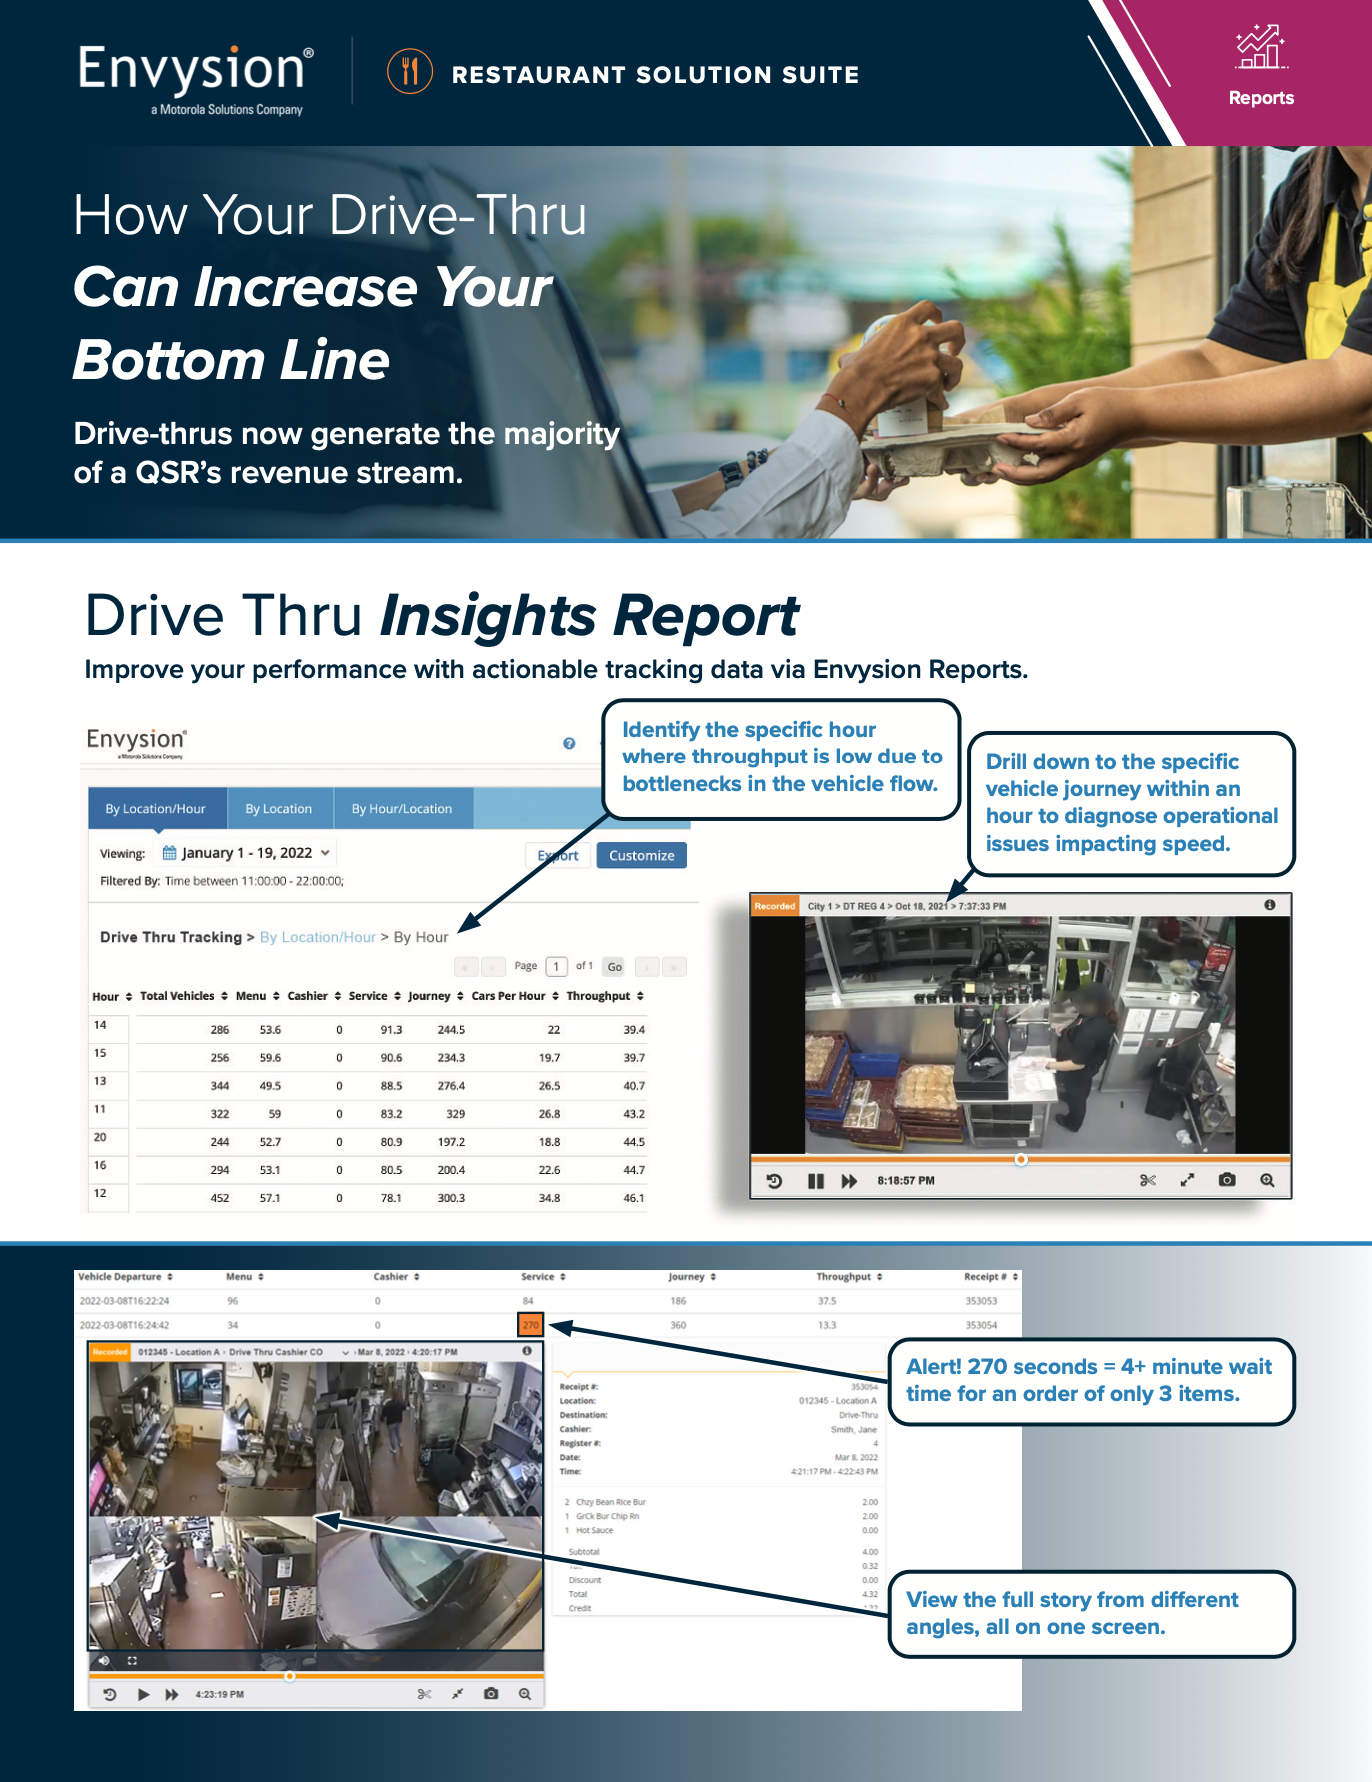 Drive Thru Insights Report